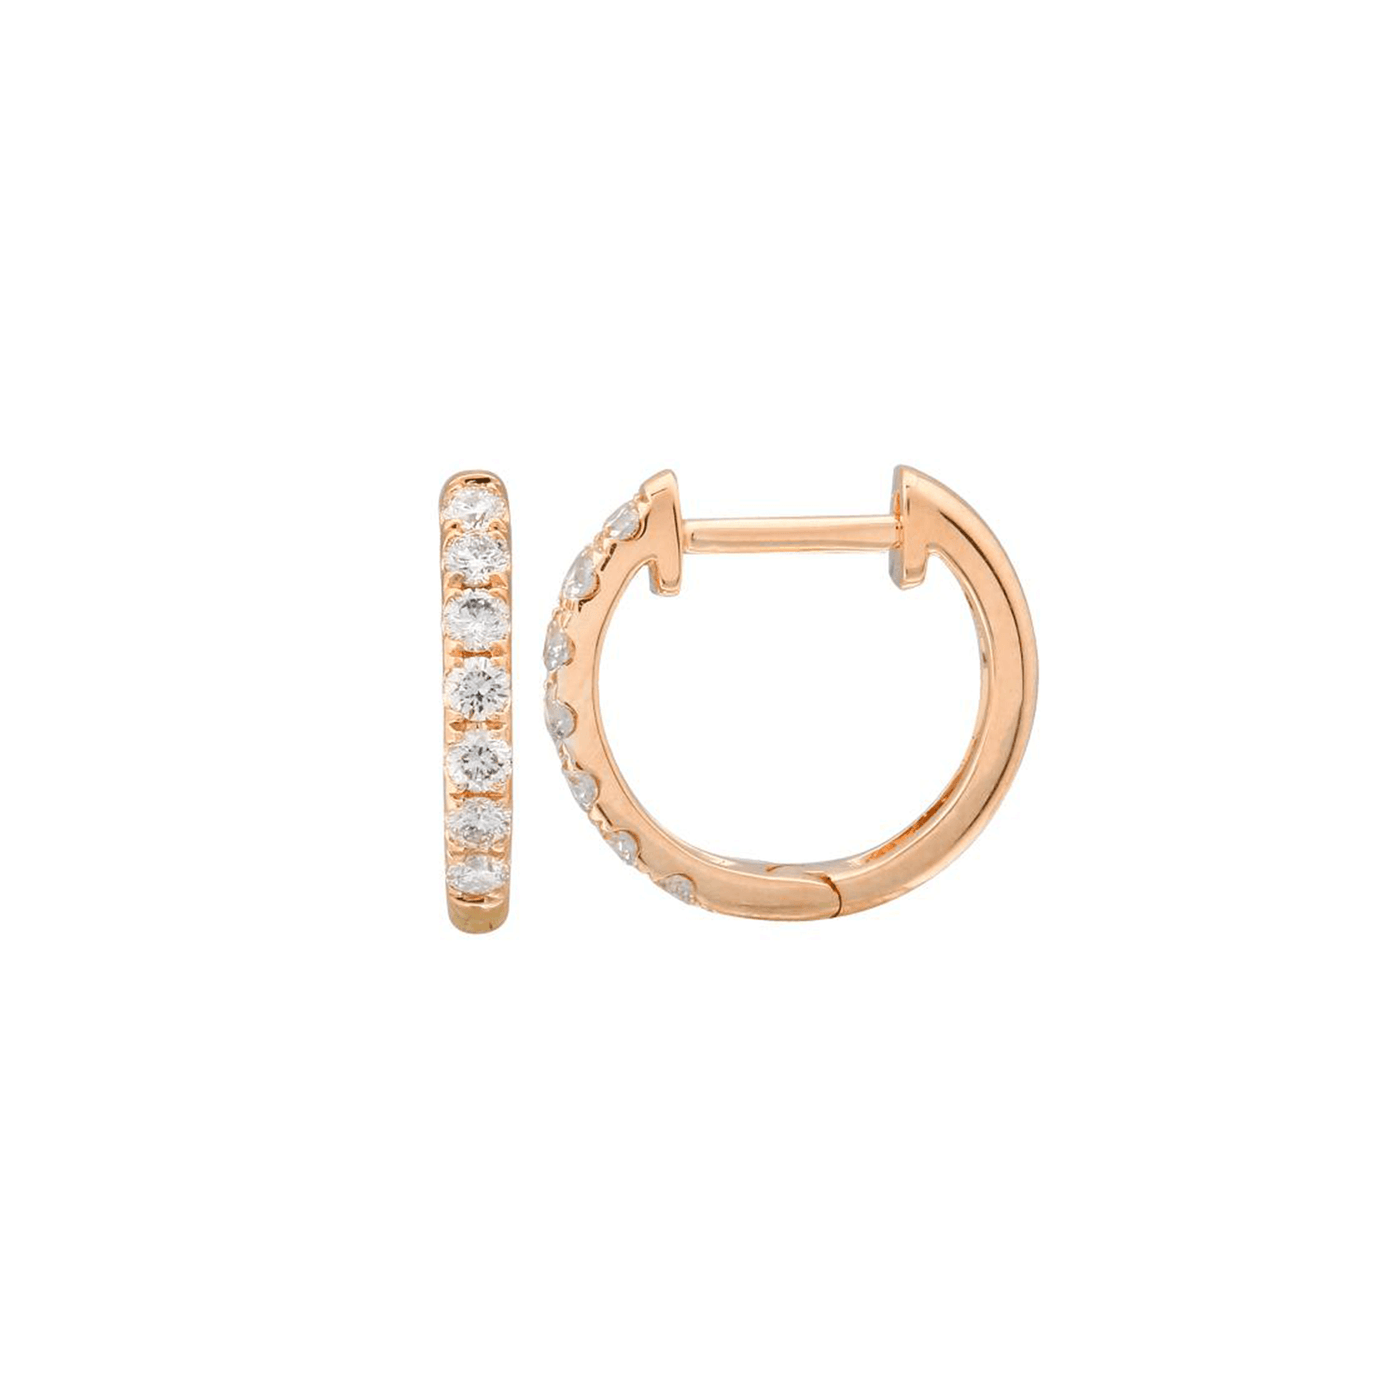 Large Gold Diamond Huggie earrings